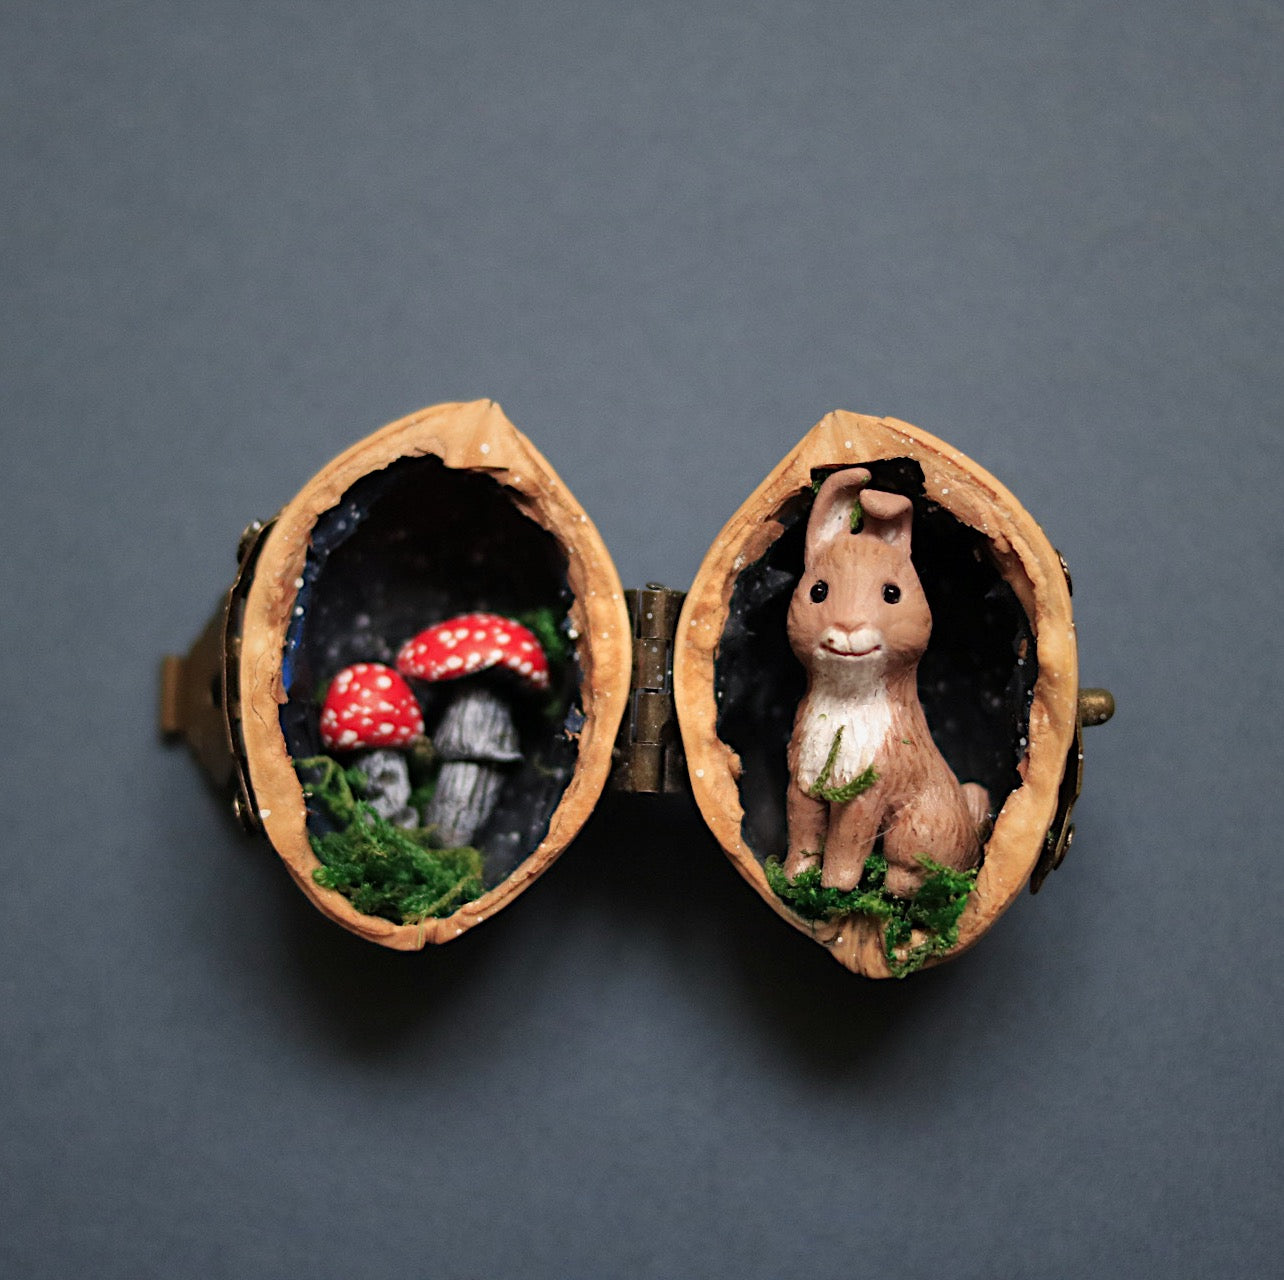 Enchanted Forest Box - Rabbit